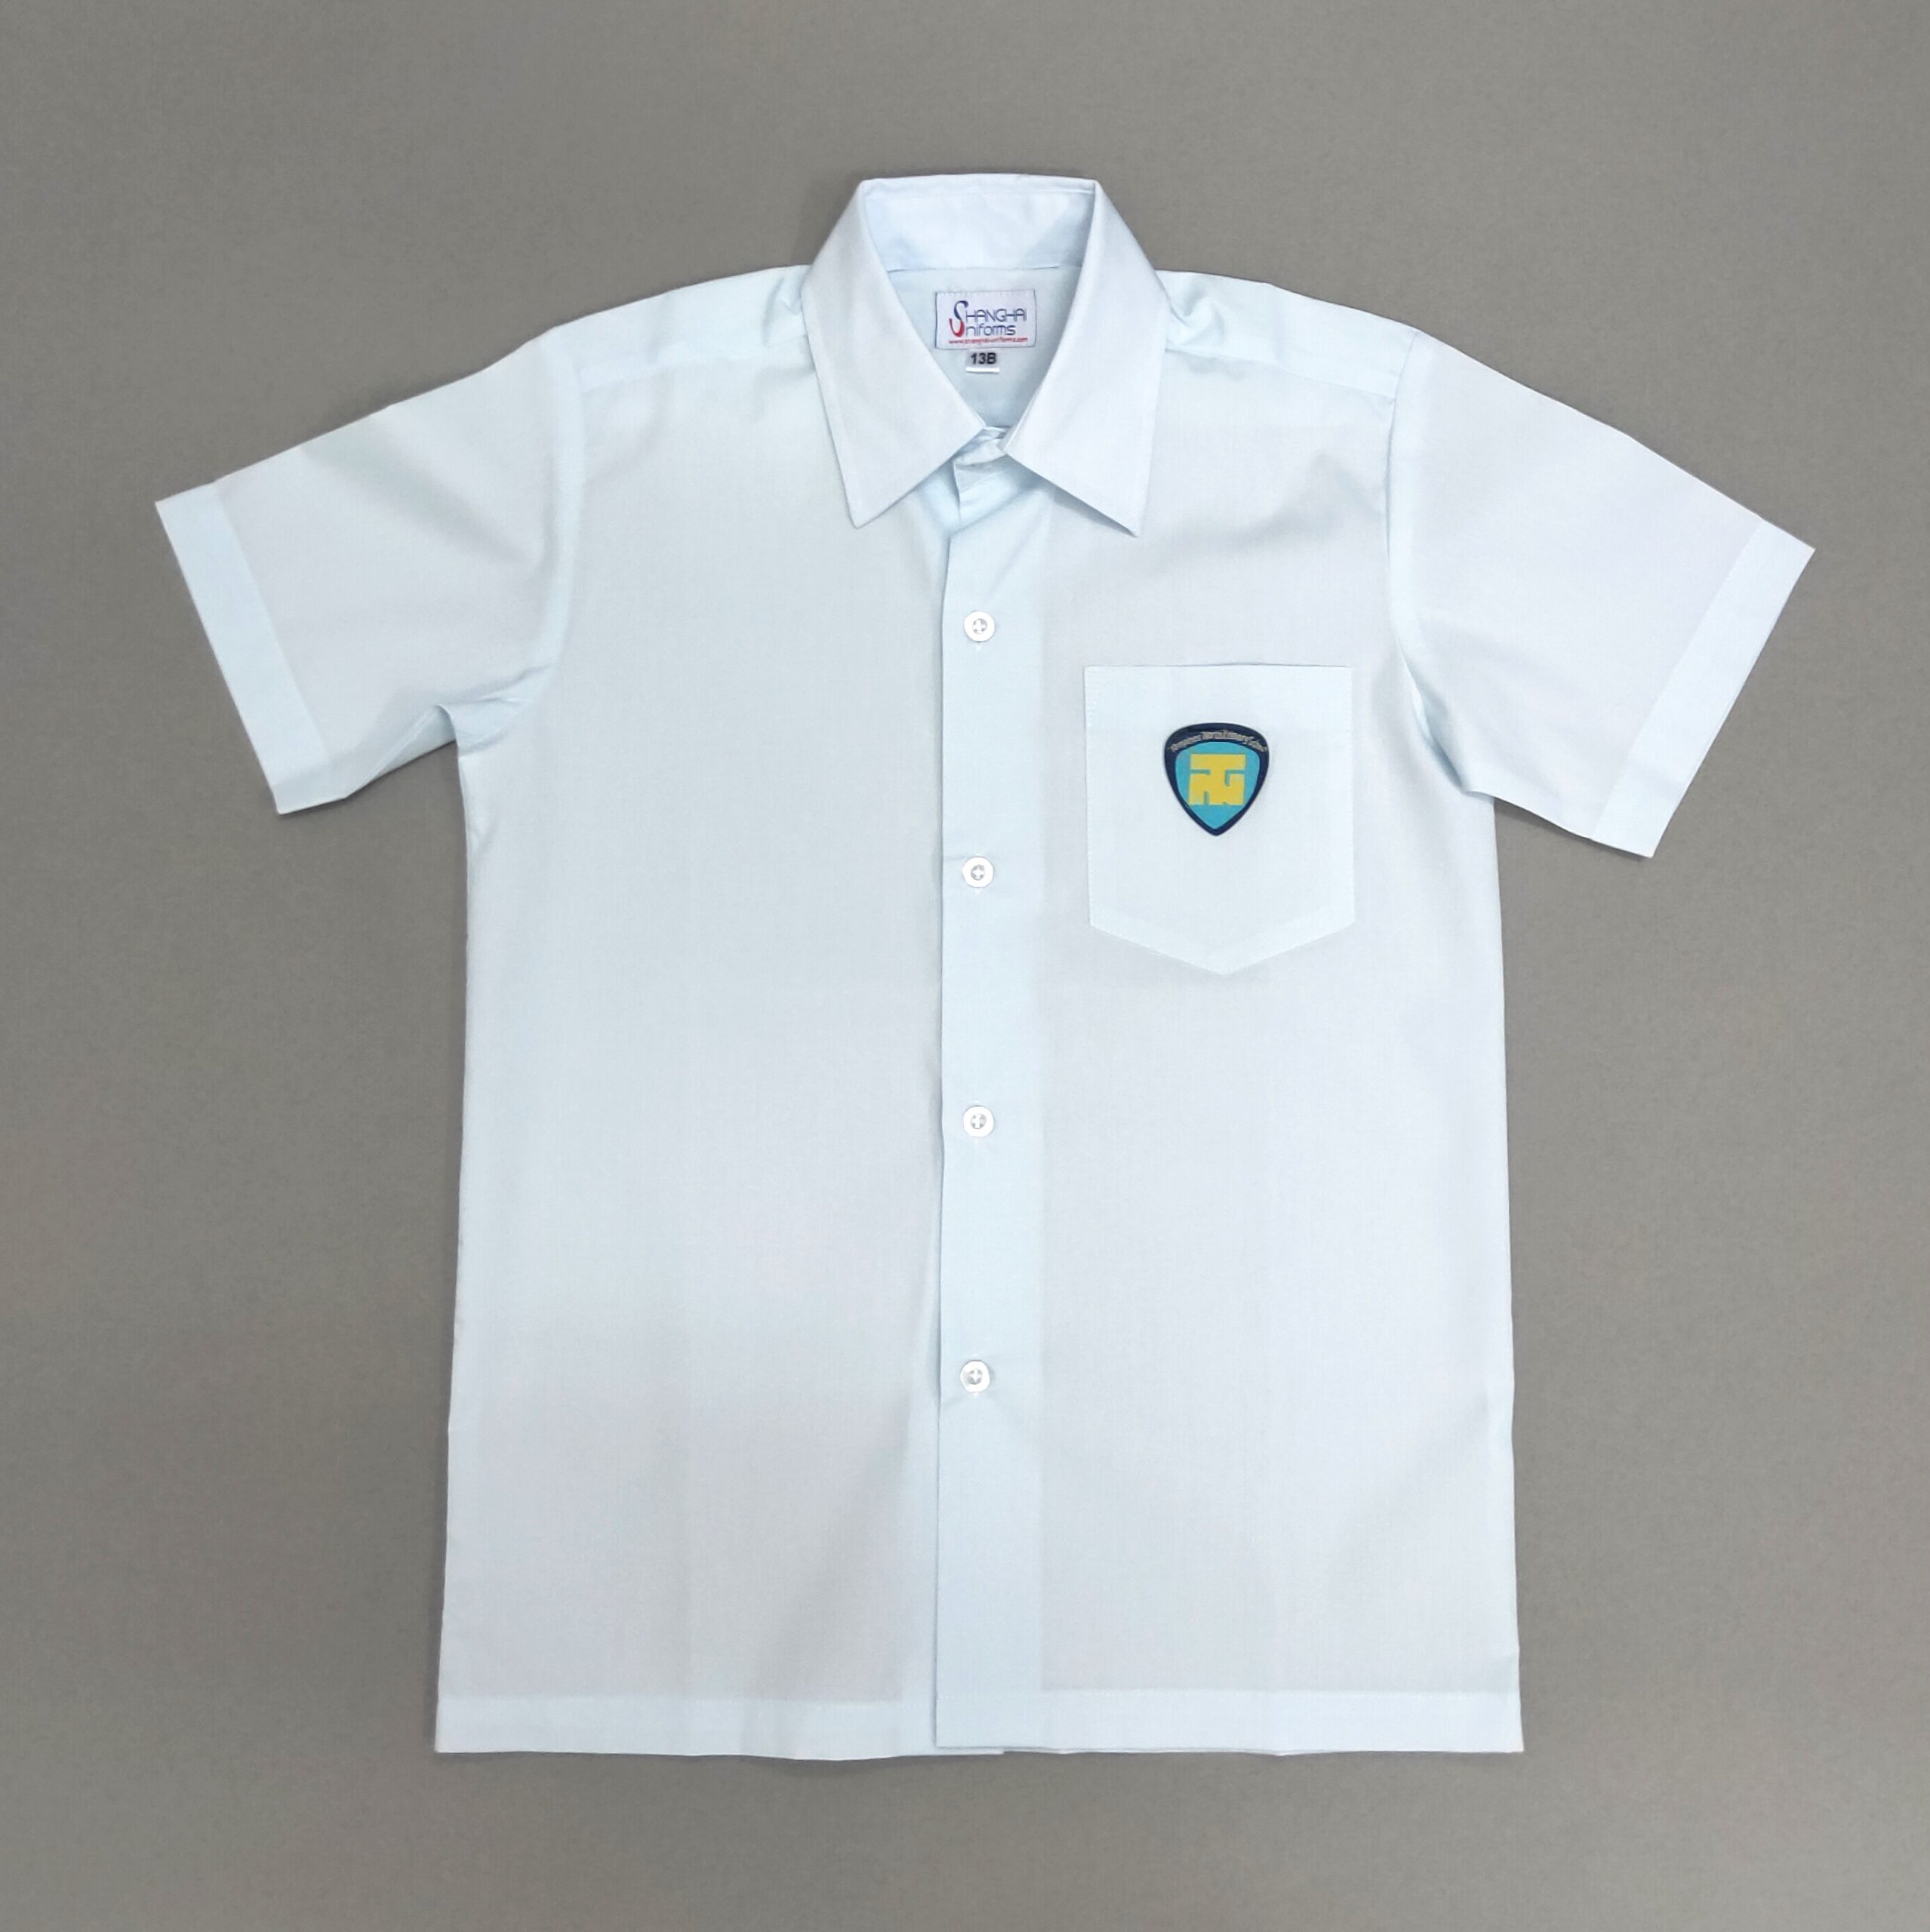 TNPS SHIRT (BOY) – Shanghai School Uniforms